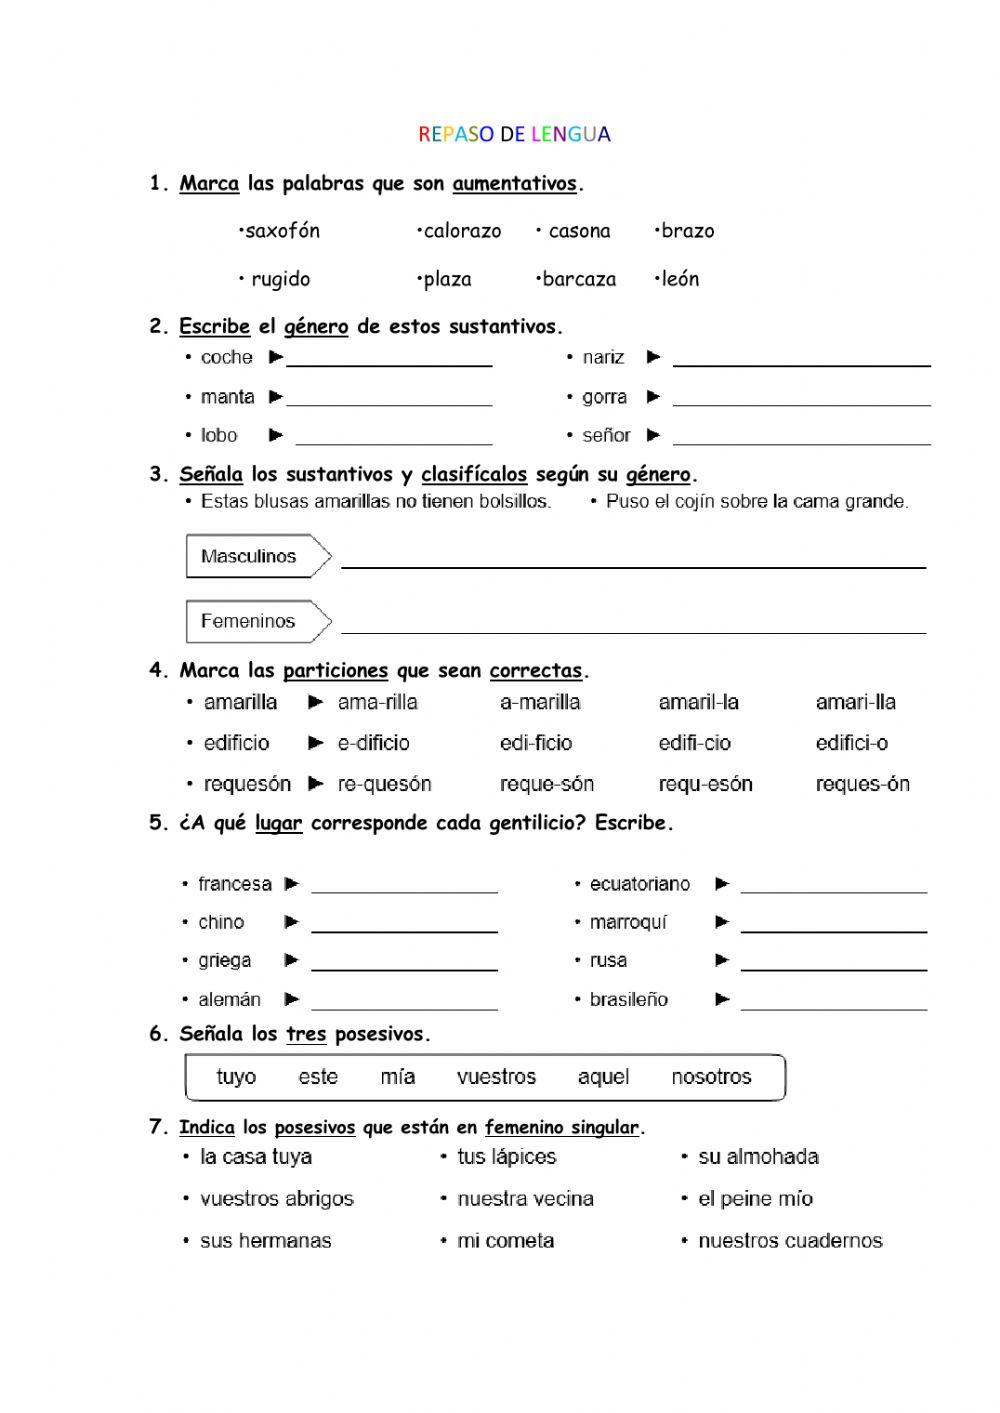 Repaso lengua vocabulario worksheet | Live Worksheets